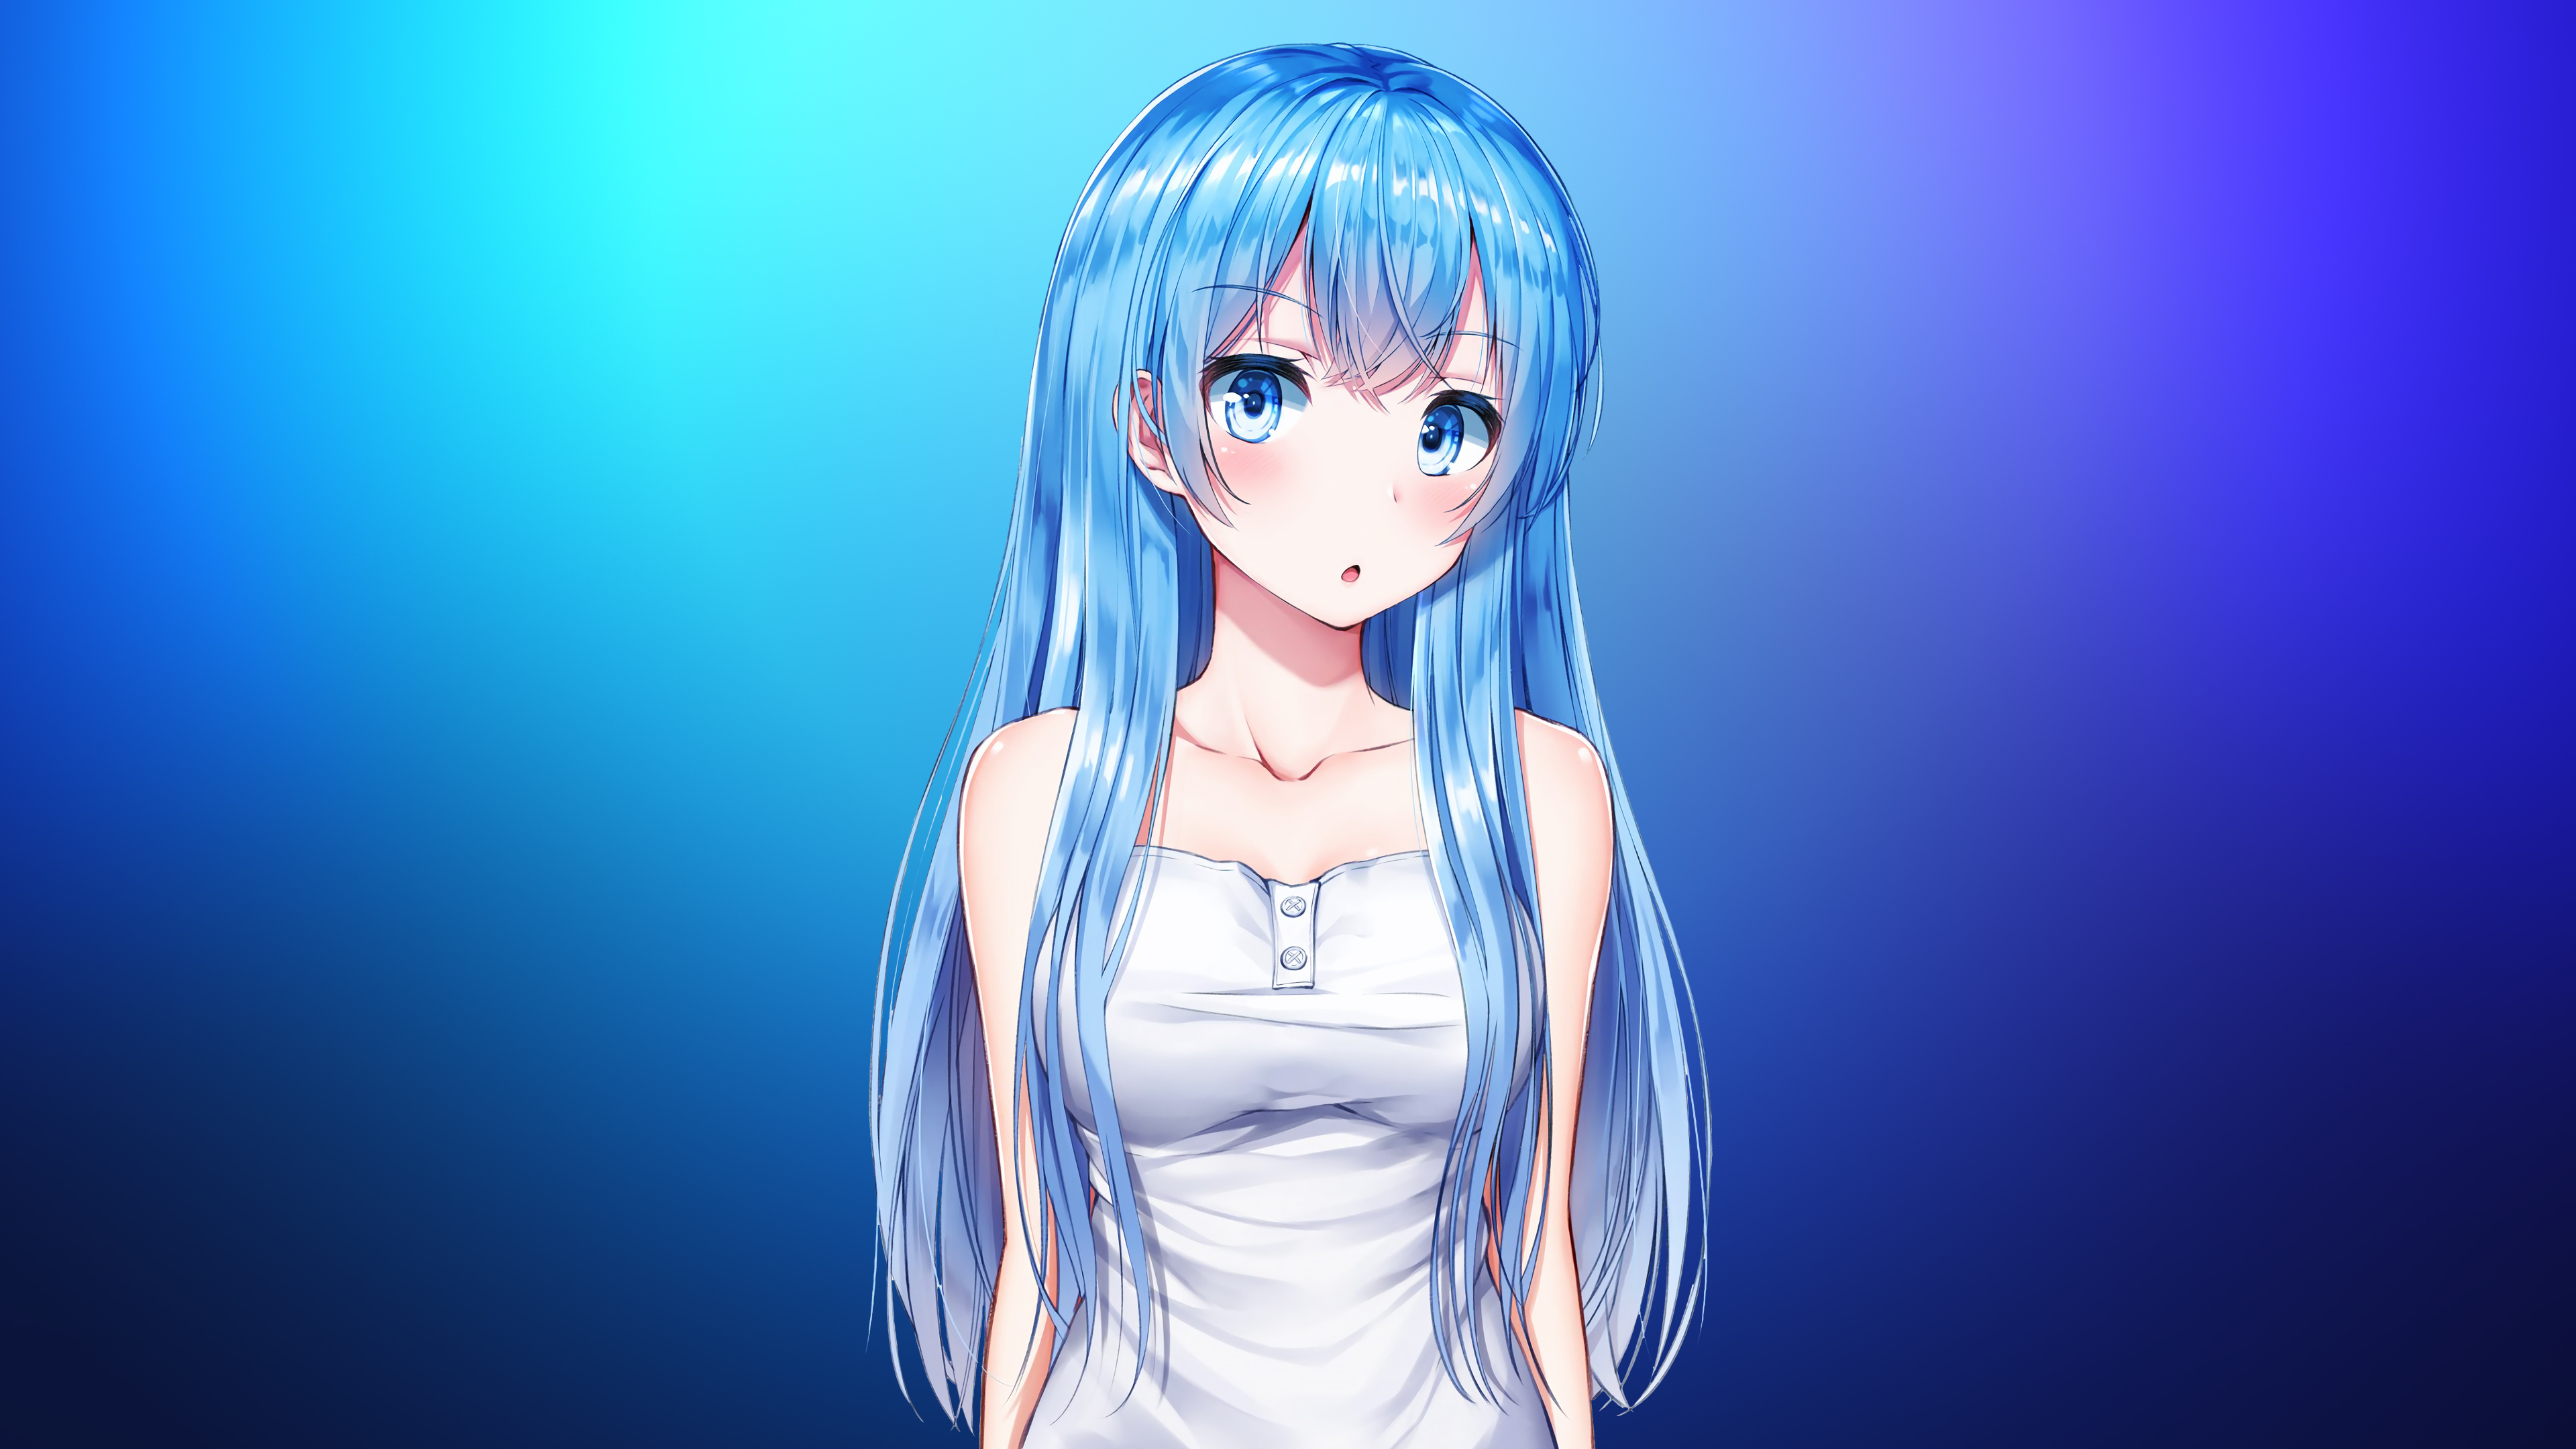 Download 3840x2400 Wallpaper Blue Hair Anime Girl Cute Original